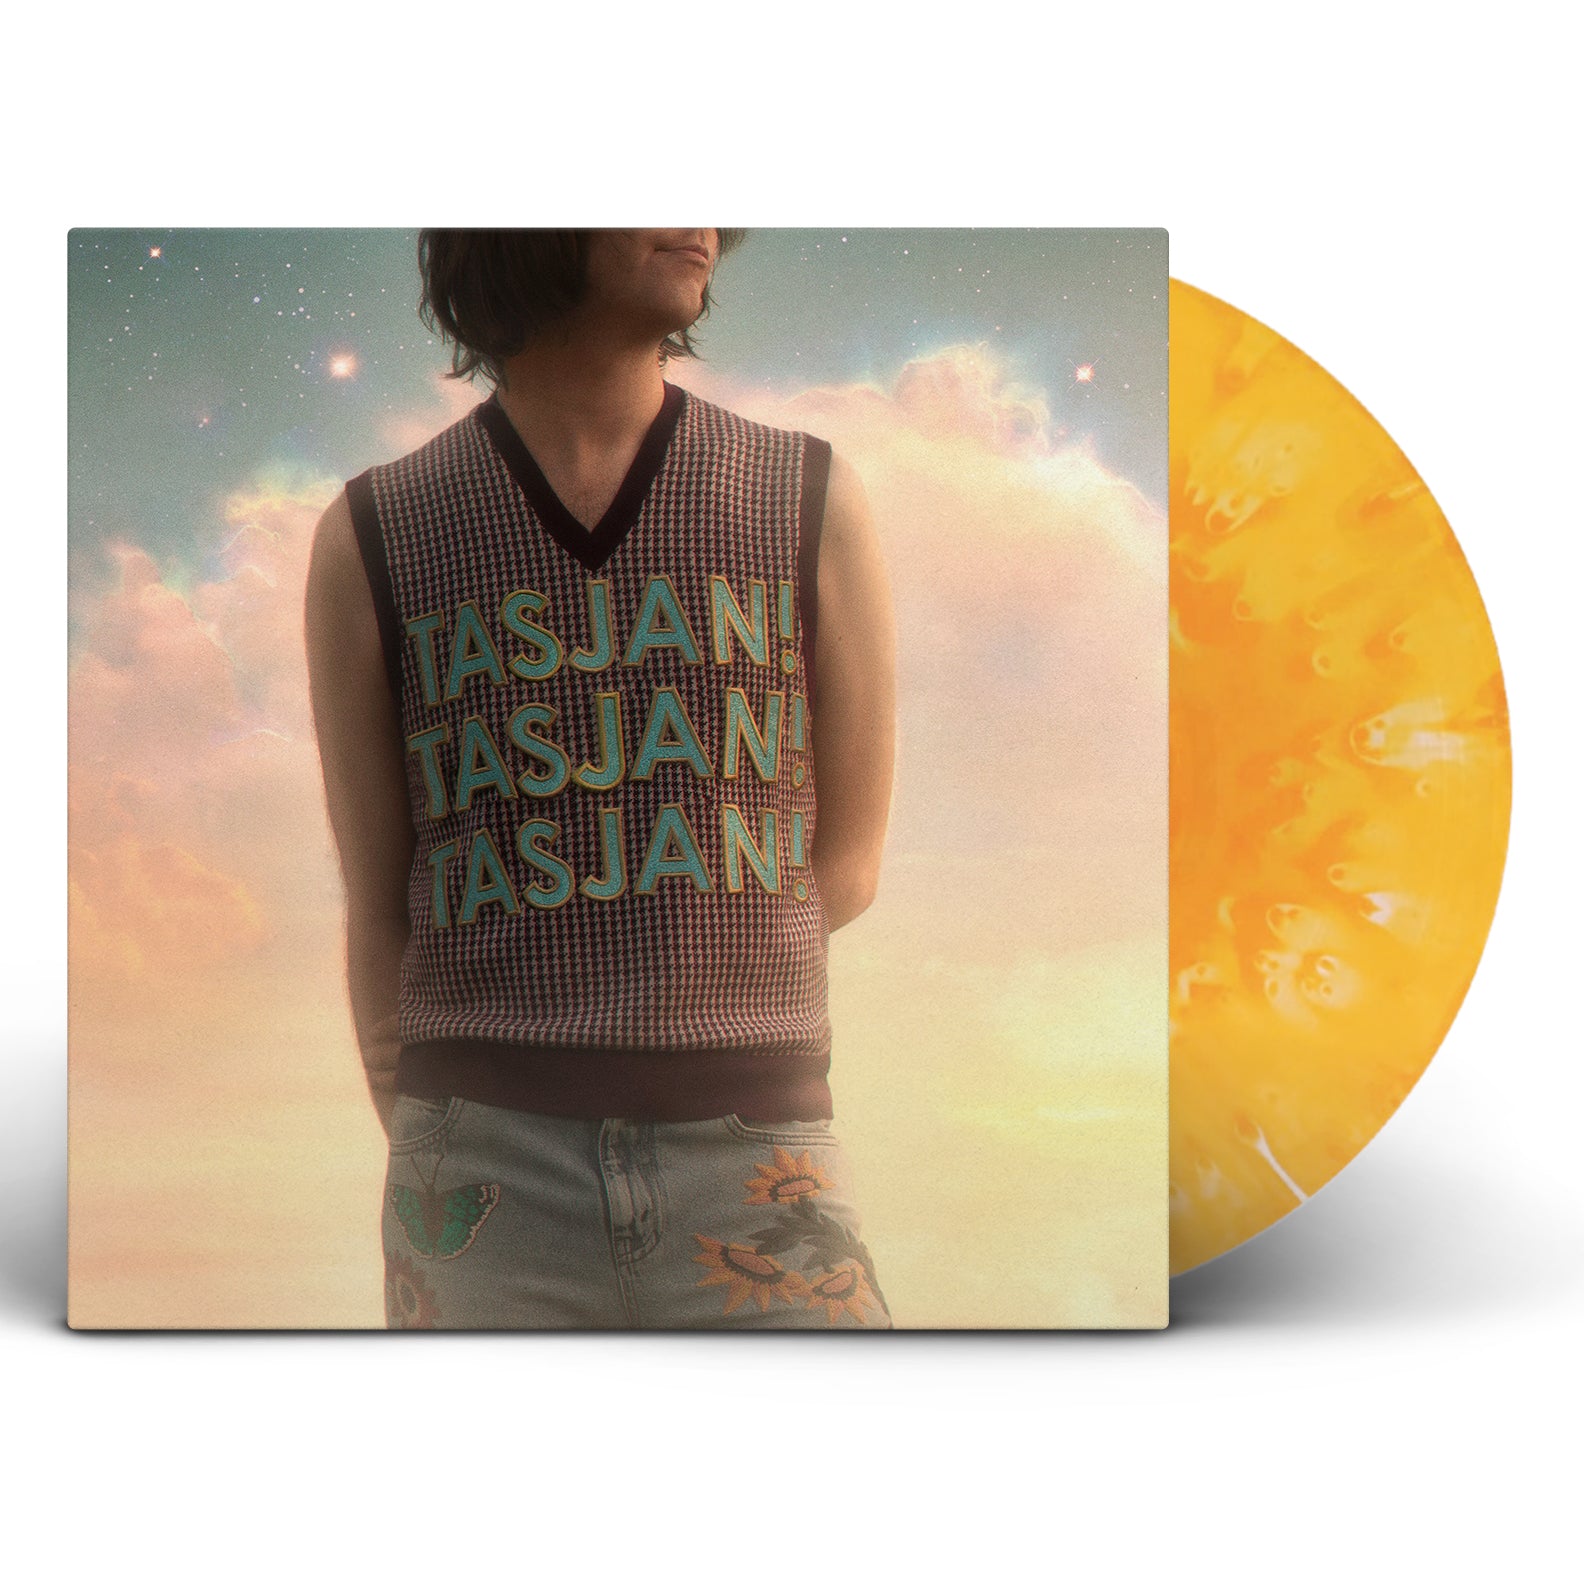 Aaron Lee Tasjan - Tasjan! Tasjan! Tasjan! [Cyber Monday New West Exclusive Color Vinyl]